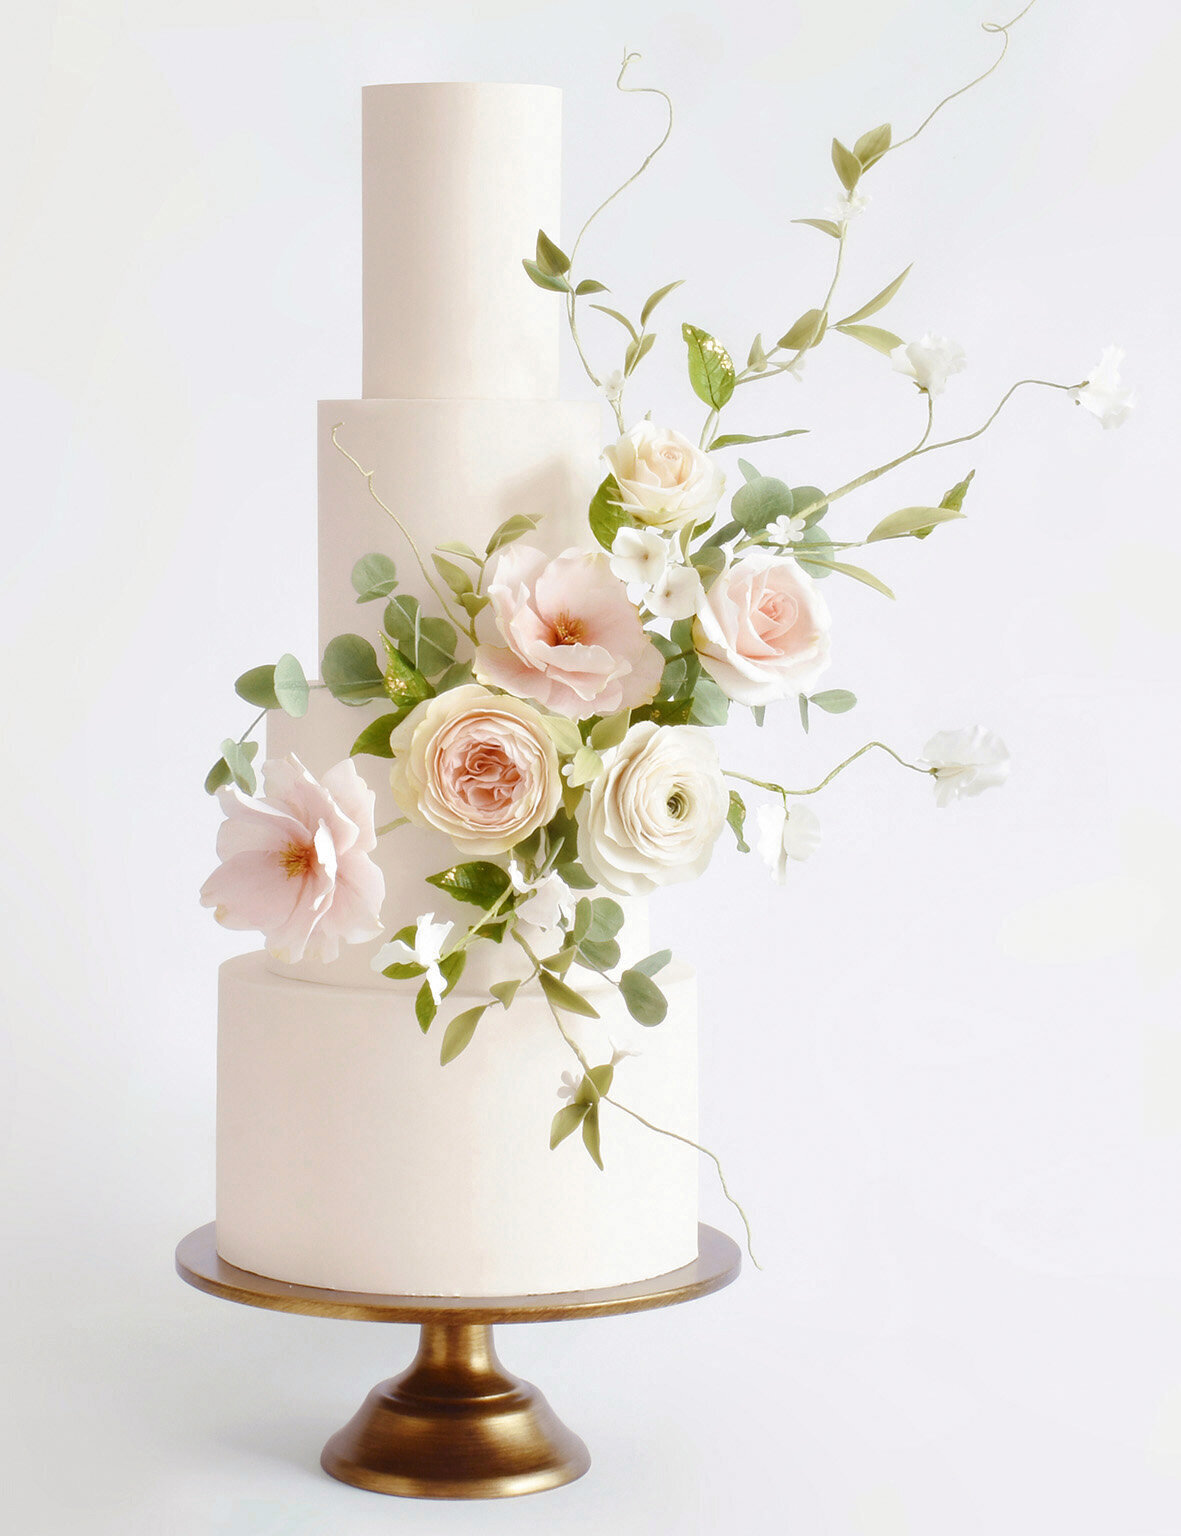 Wedding Cakes Gallery - Audrey's Fine Baked Goods, Inc. | Island wedding  cakes, Cake gallery, Turquoise wedding cake